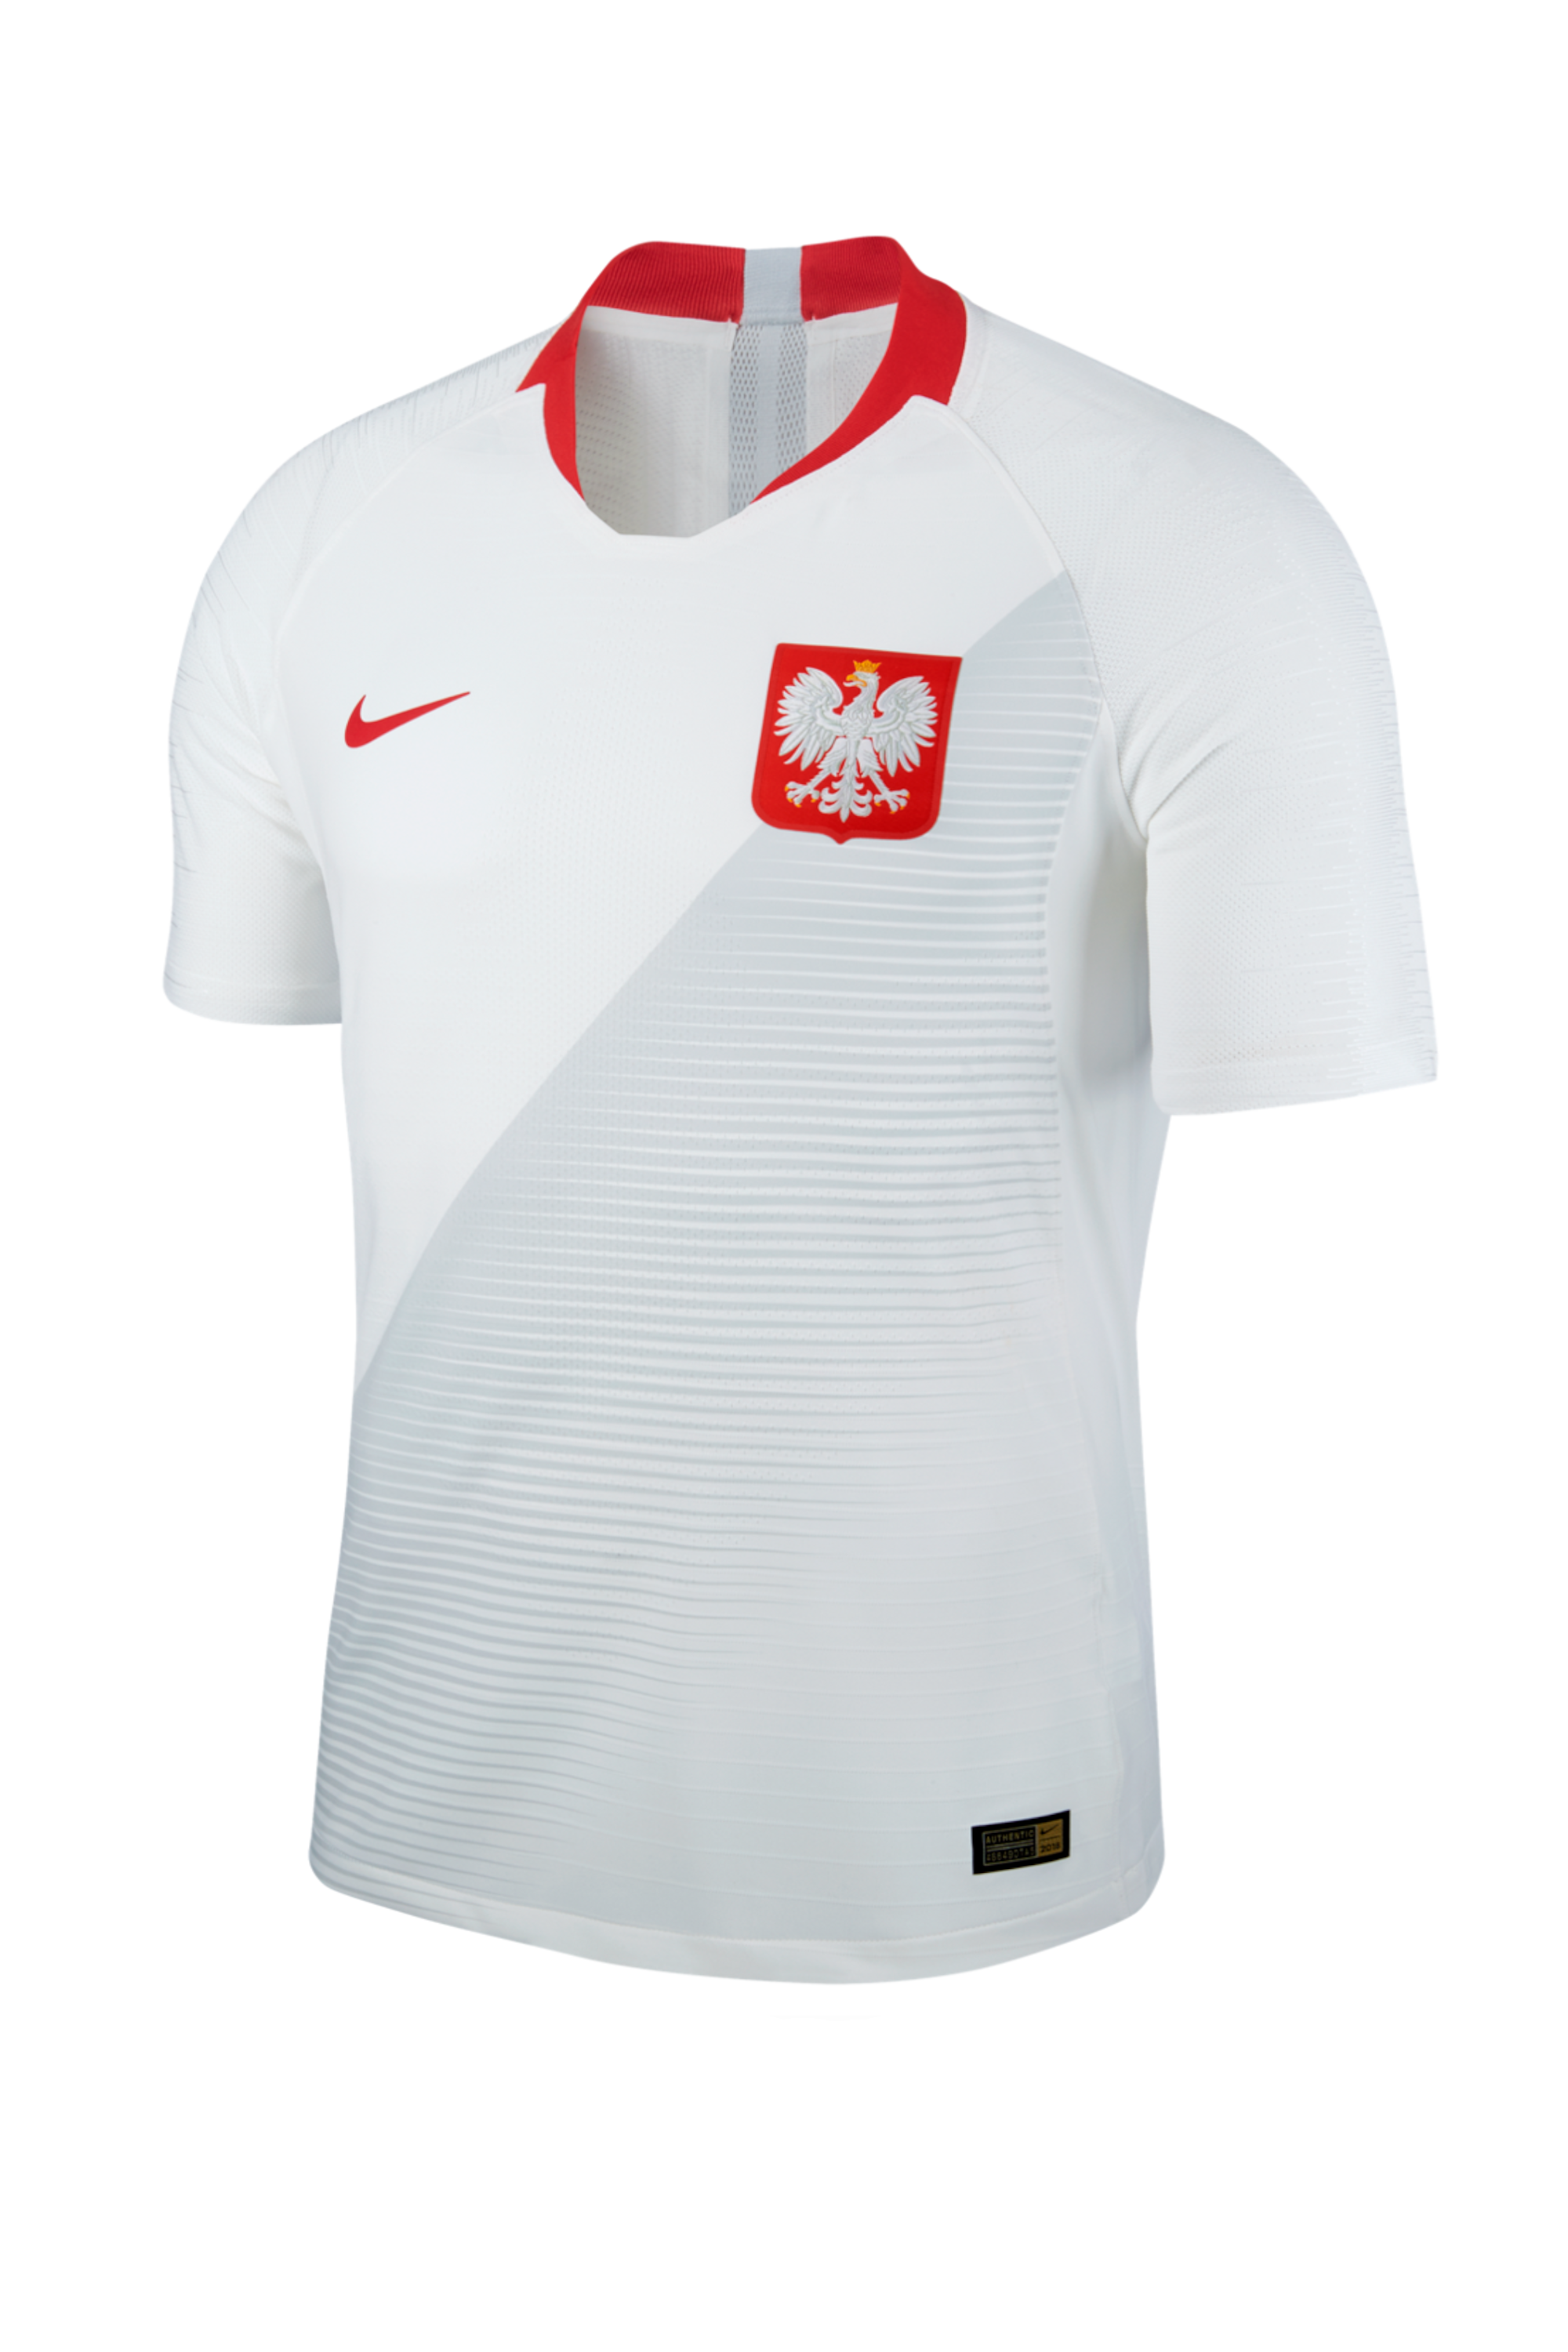 Football Shirt Poland Vapor Match Home | R-GOL.com Football boots & equipment